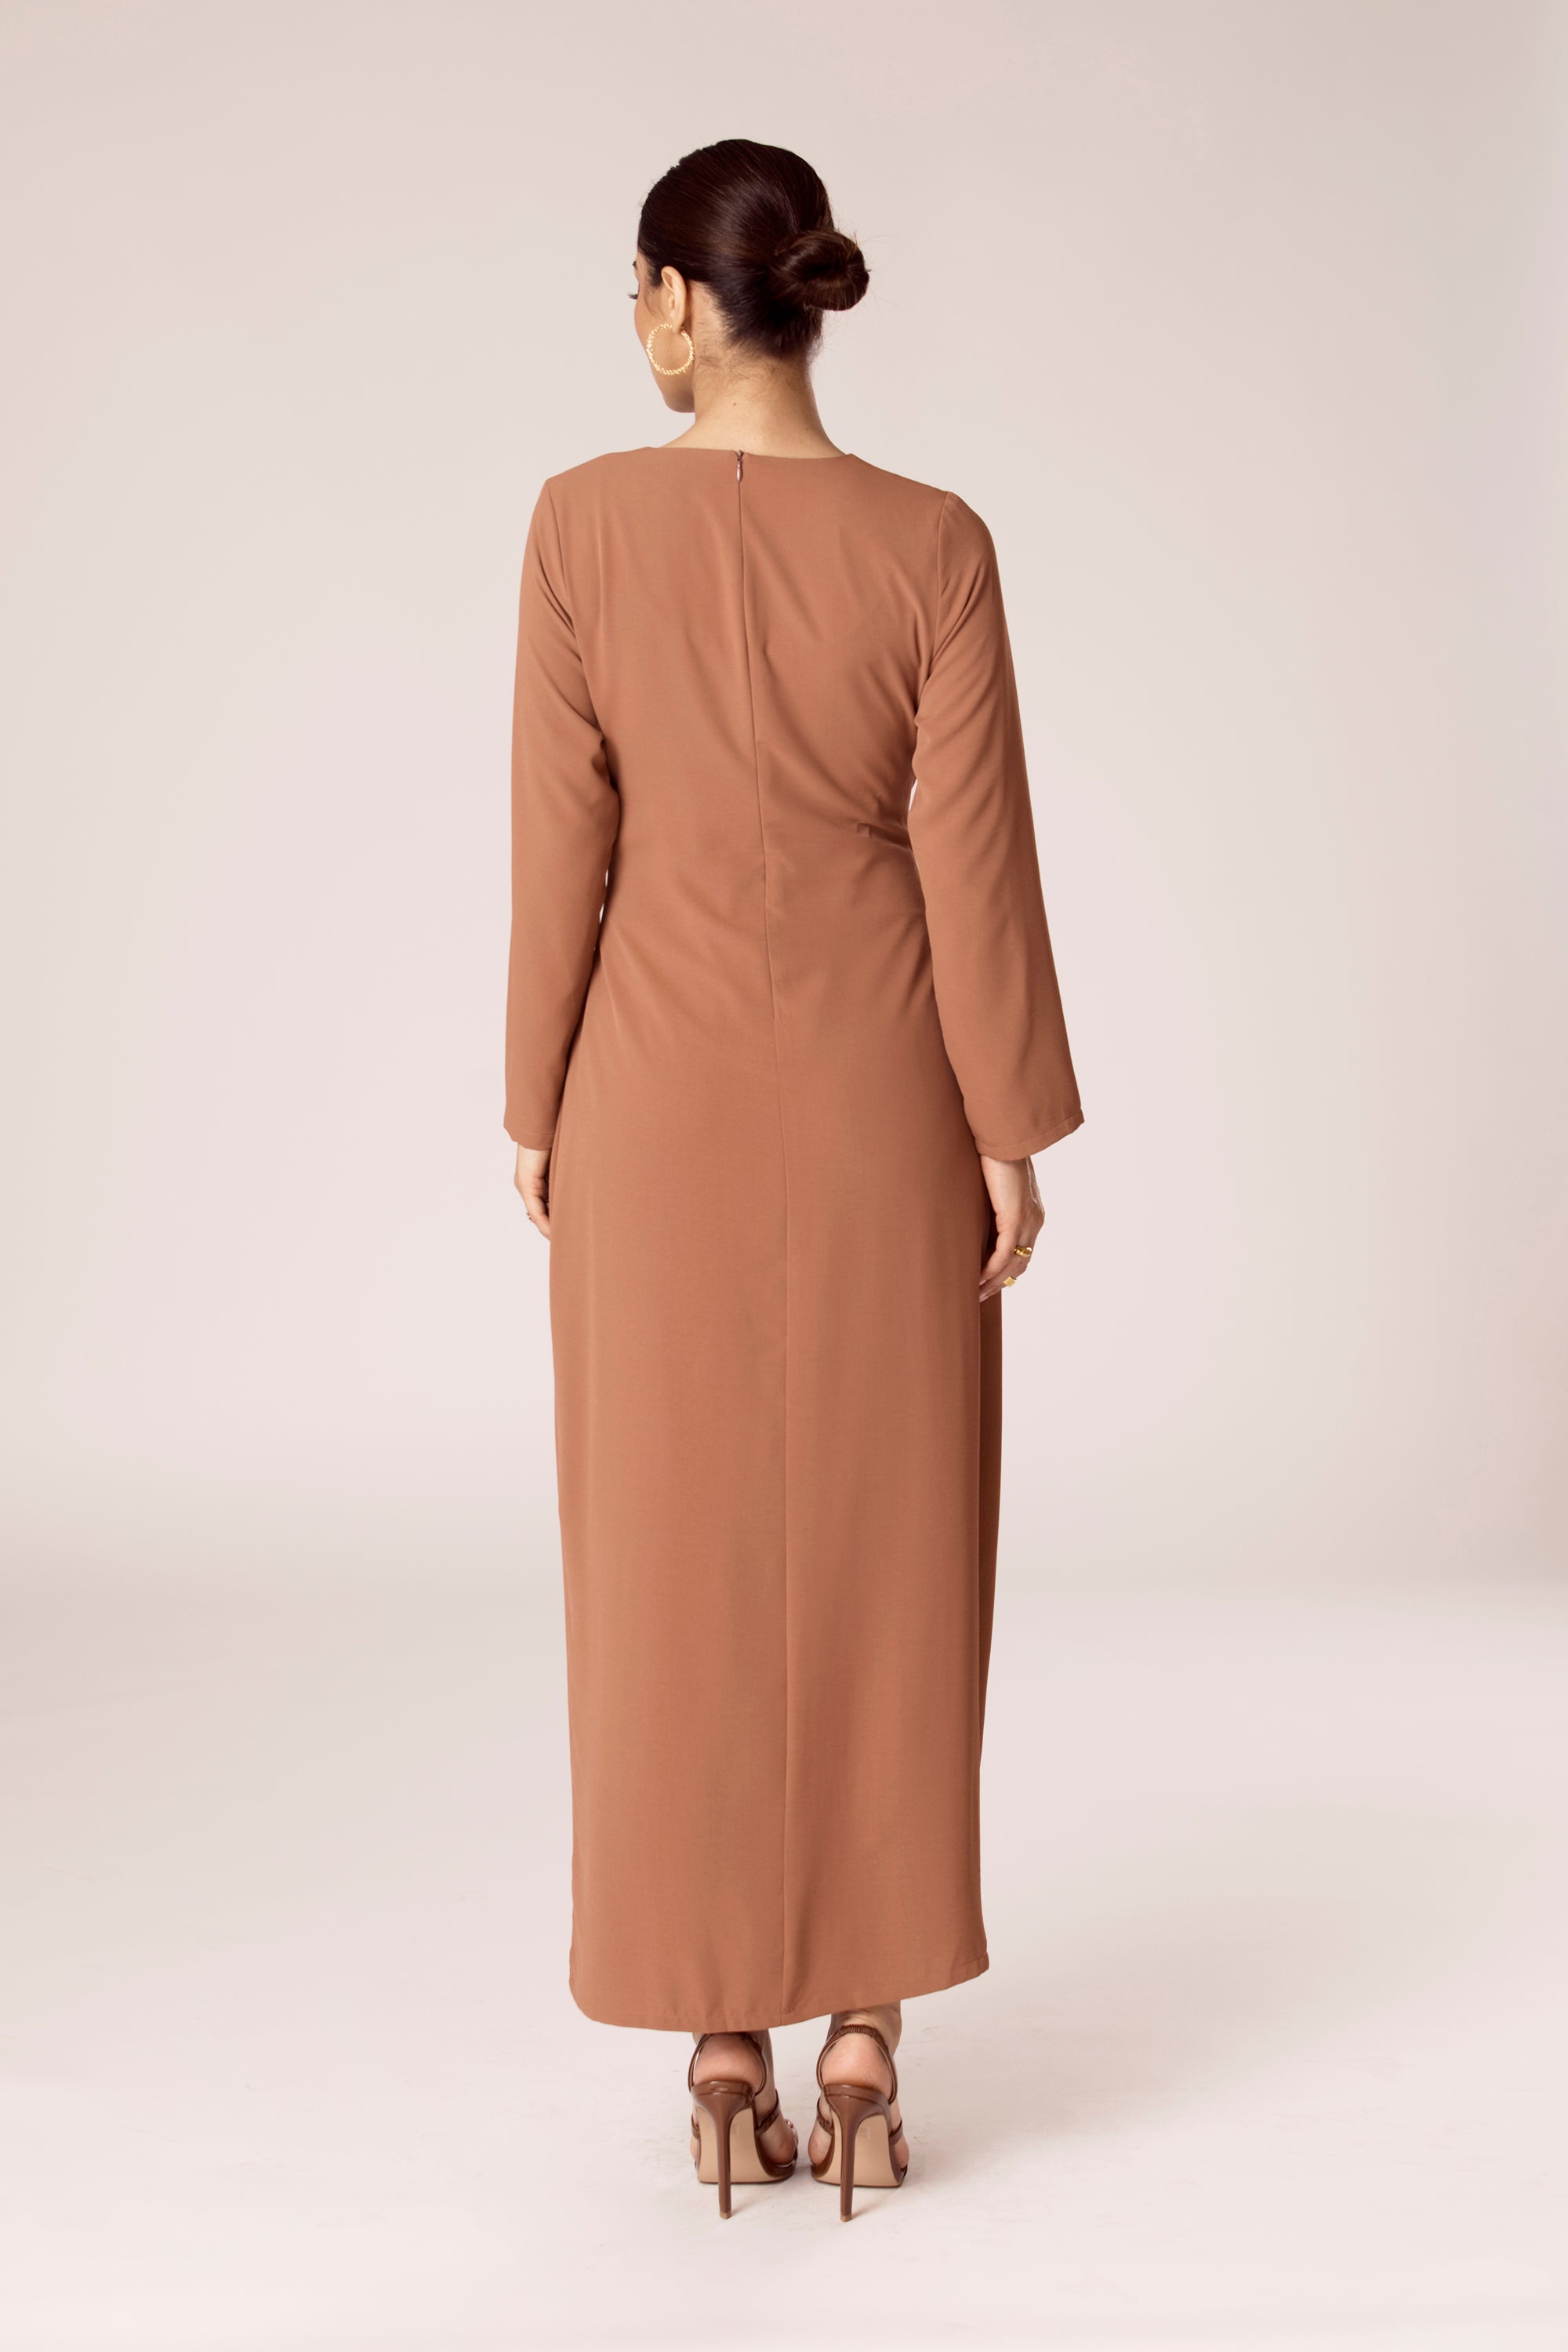 Isabella Tie Waist Maxi Dress - Mushroom Veiled Collection 